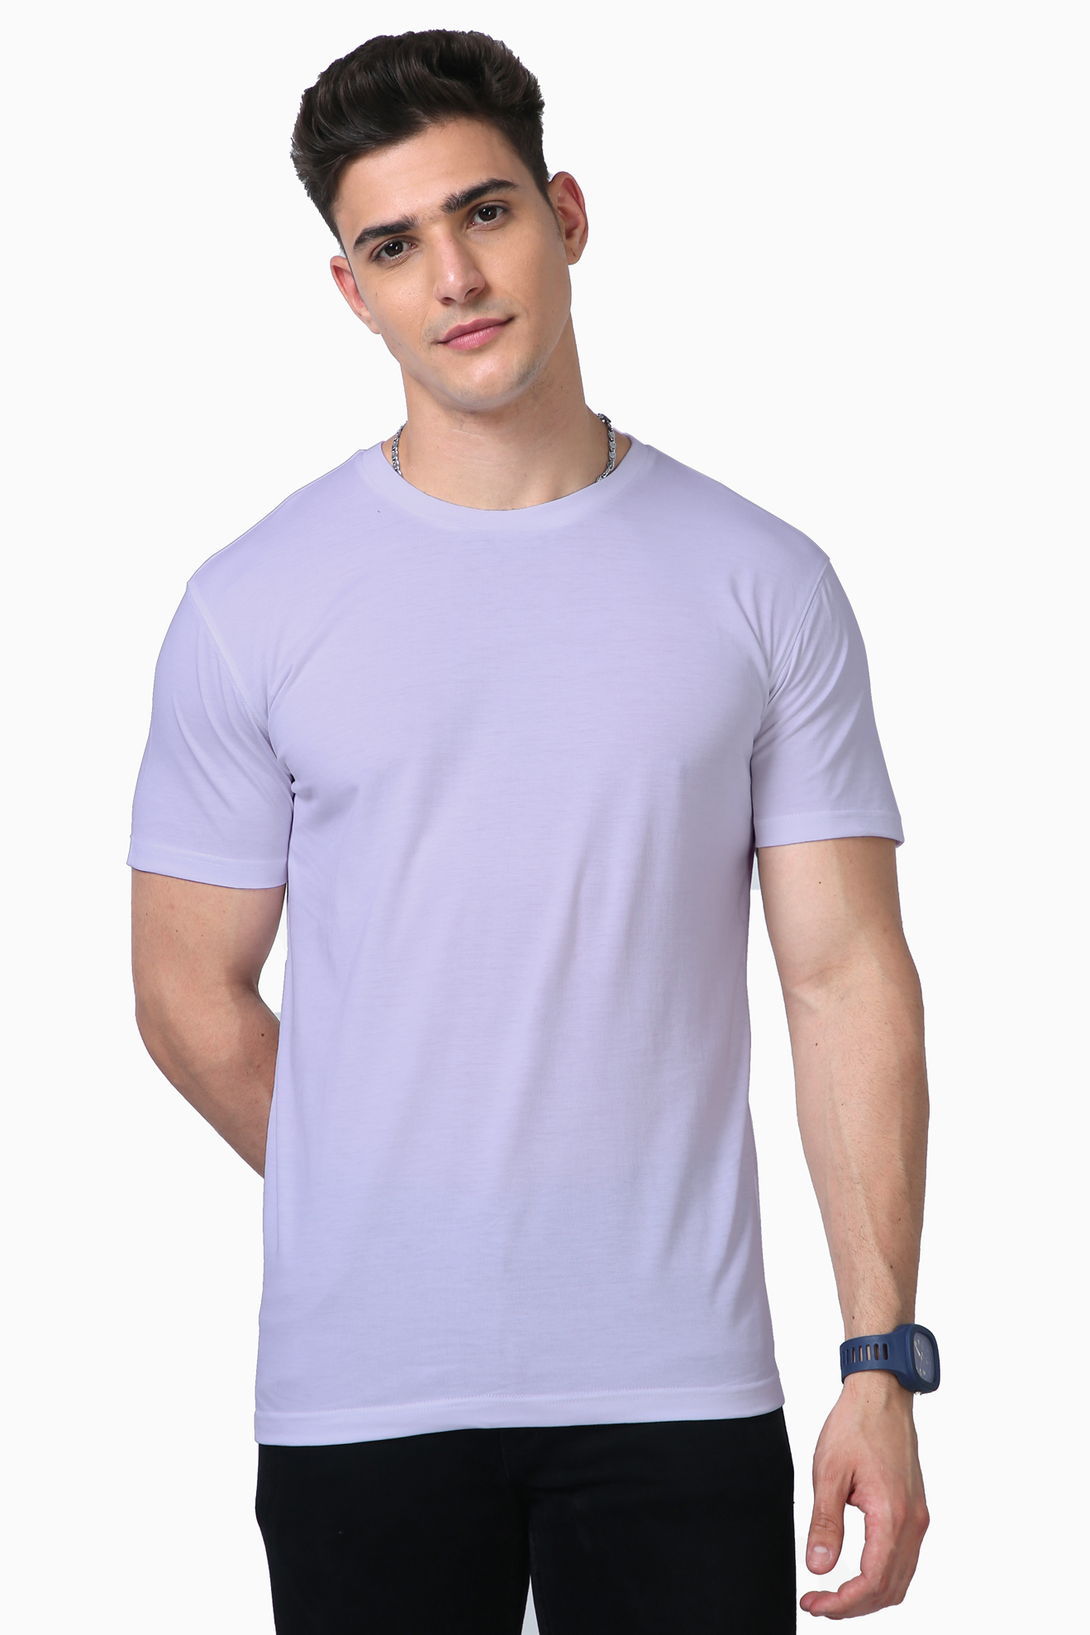 Plain Supima T-Shirts For Women - WowWaves - 4